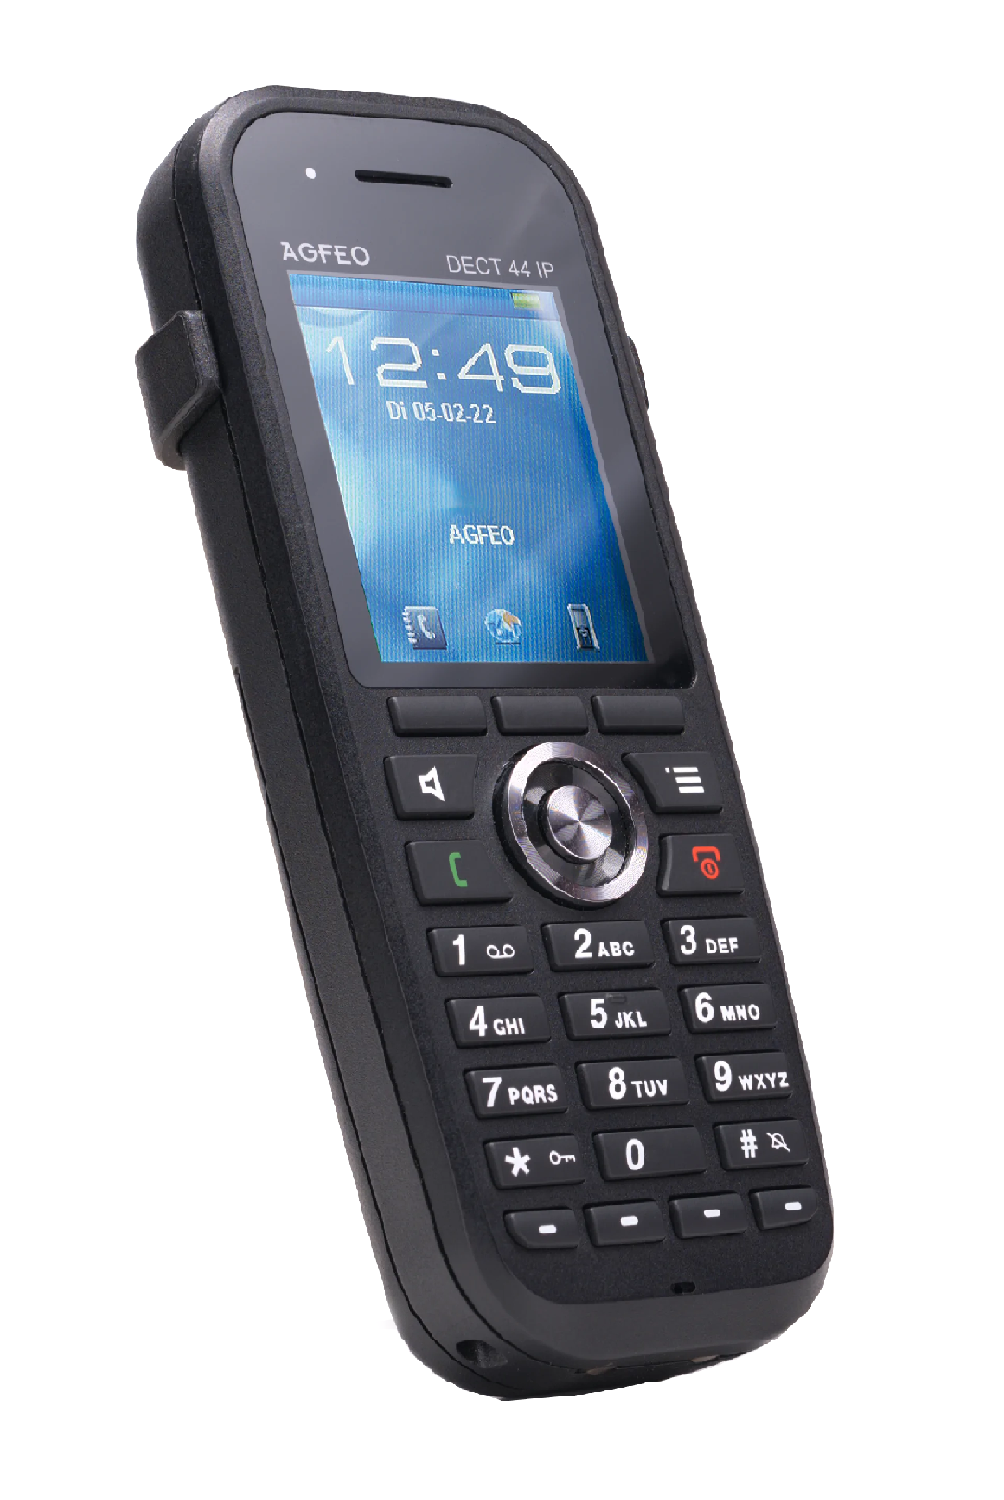 AGFEO Telefon DECT44 IP schwarz